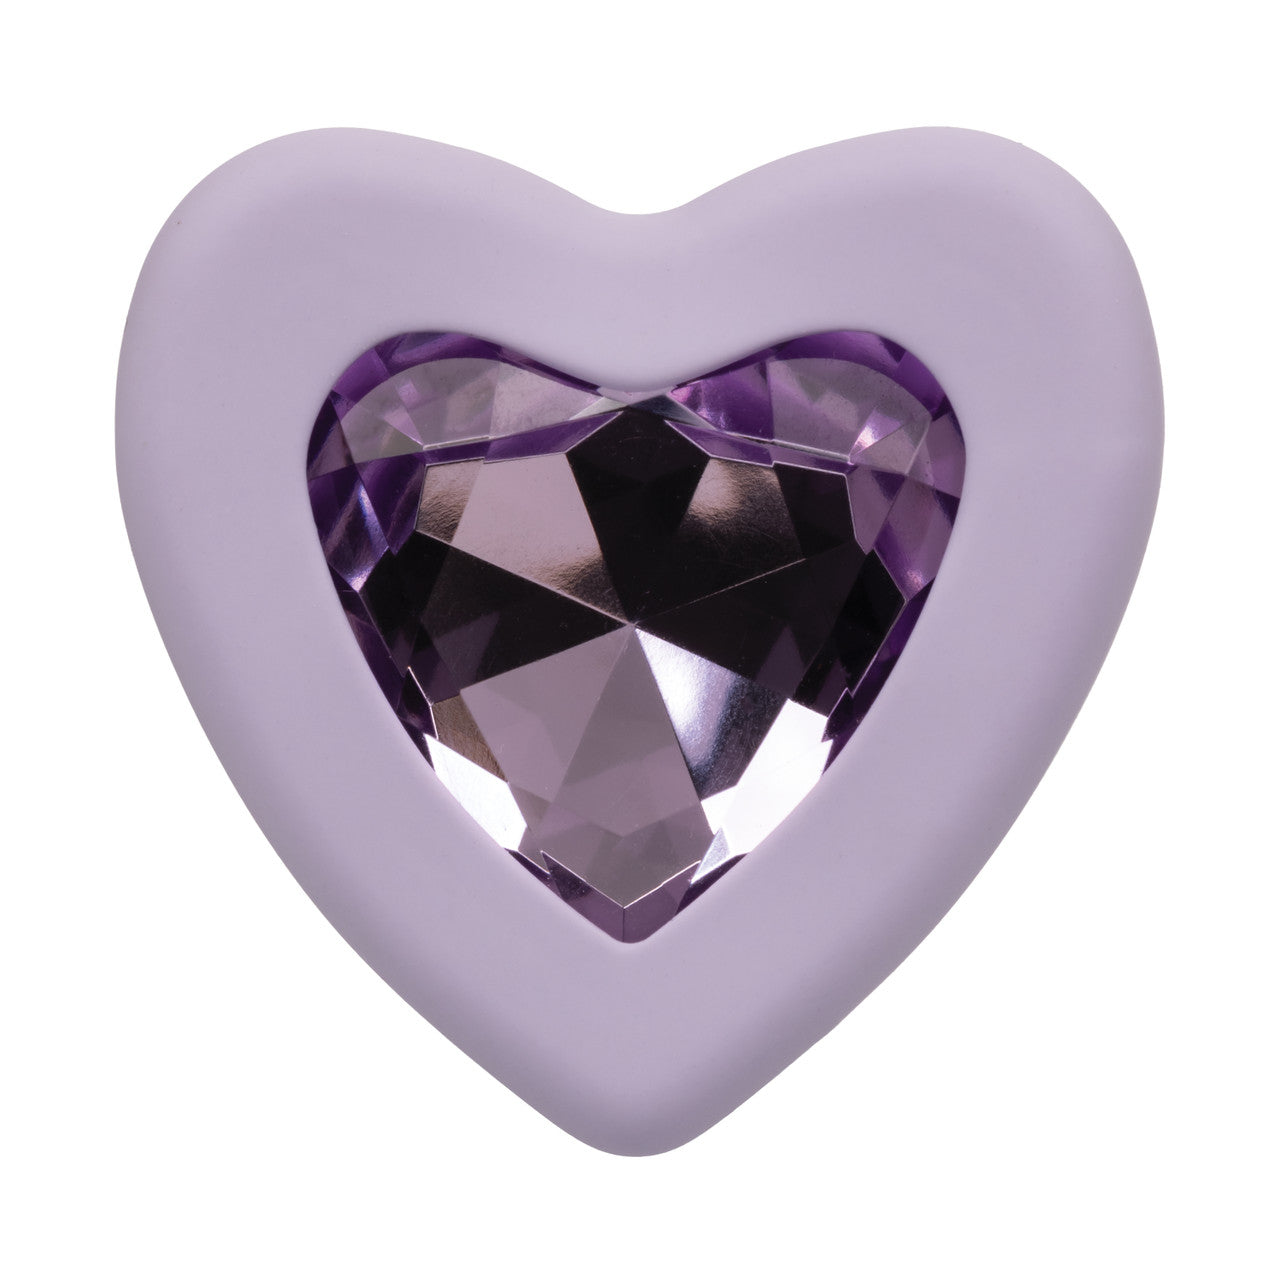 Pale purple heart shaped gem on flanged base of anal plug.